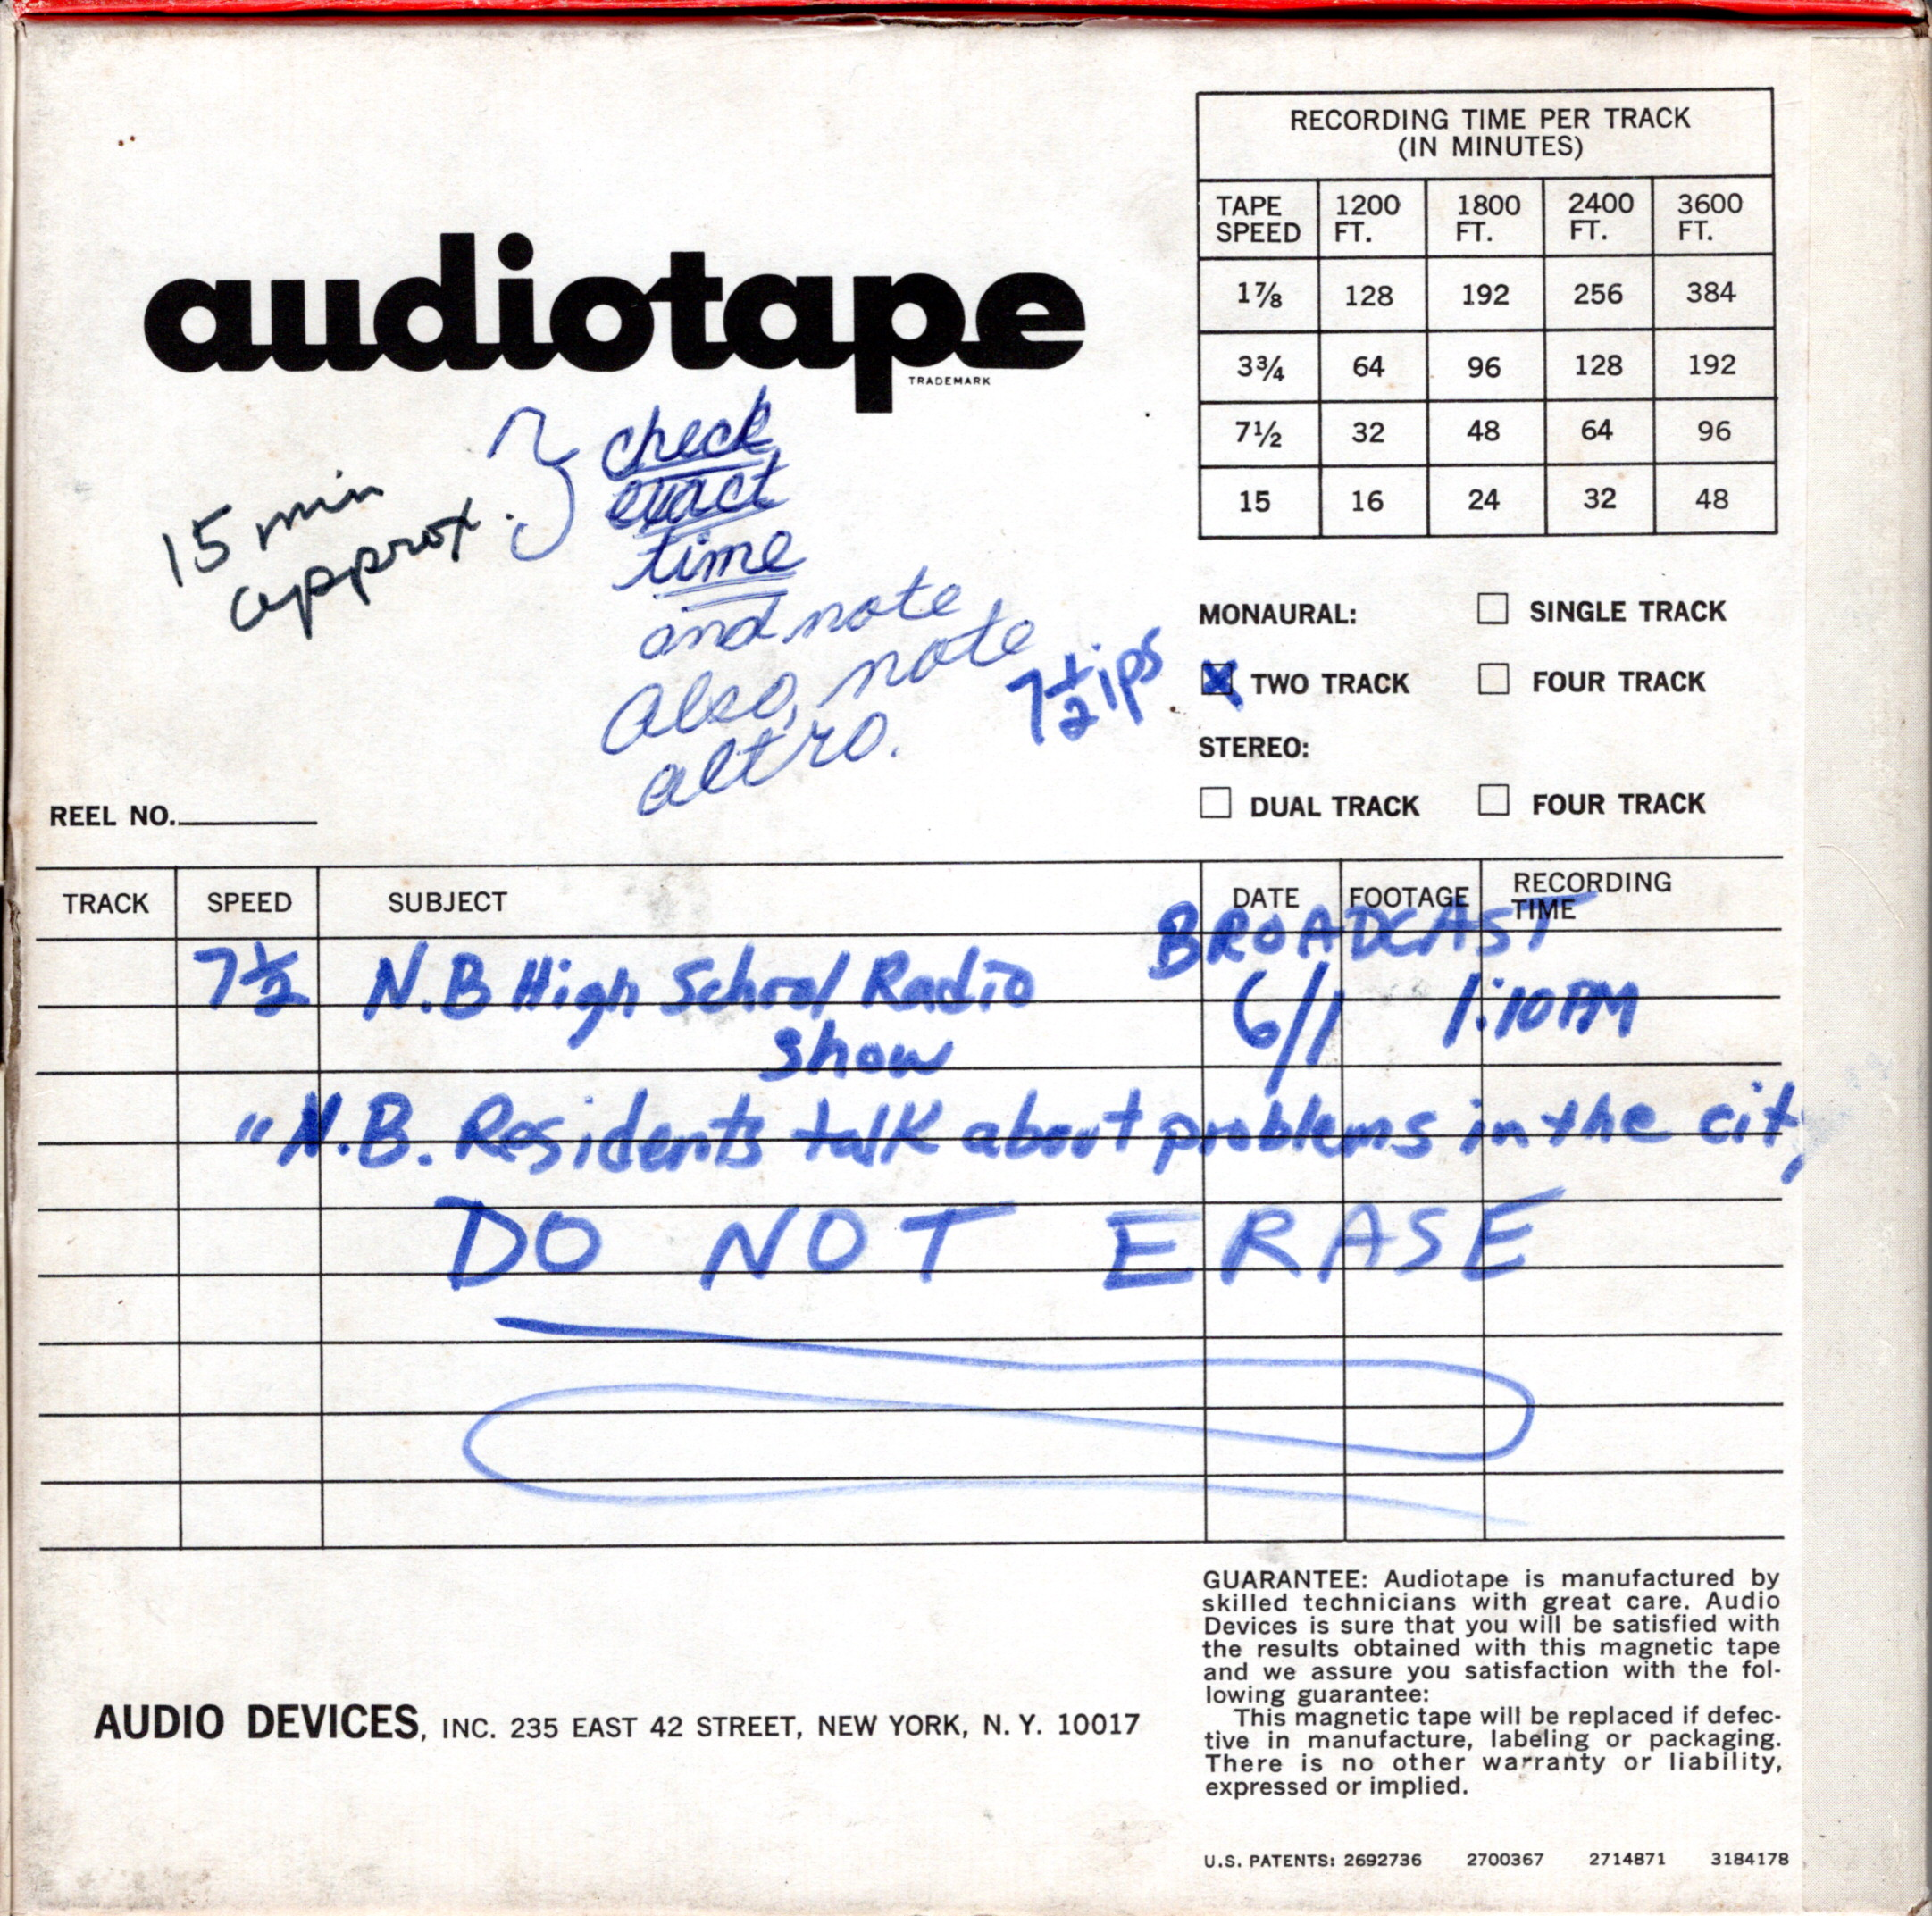 New Brunswick High School Program - Broadcast by WRSU-FM - June 1 1974<br/>Back  - Audio Available Under Sounds 1973